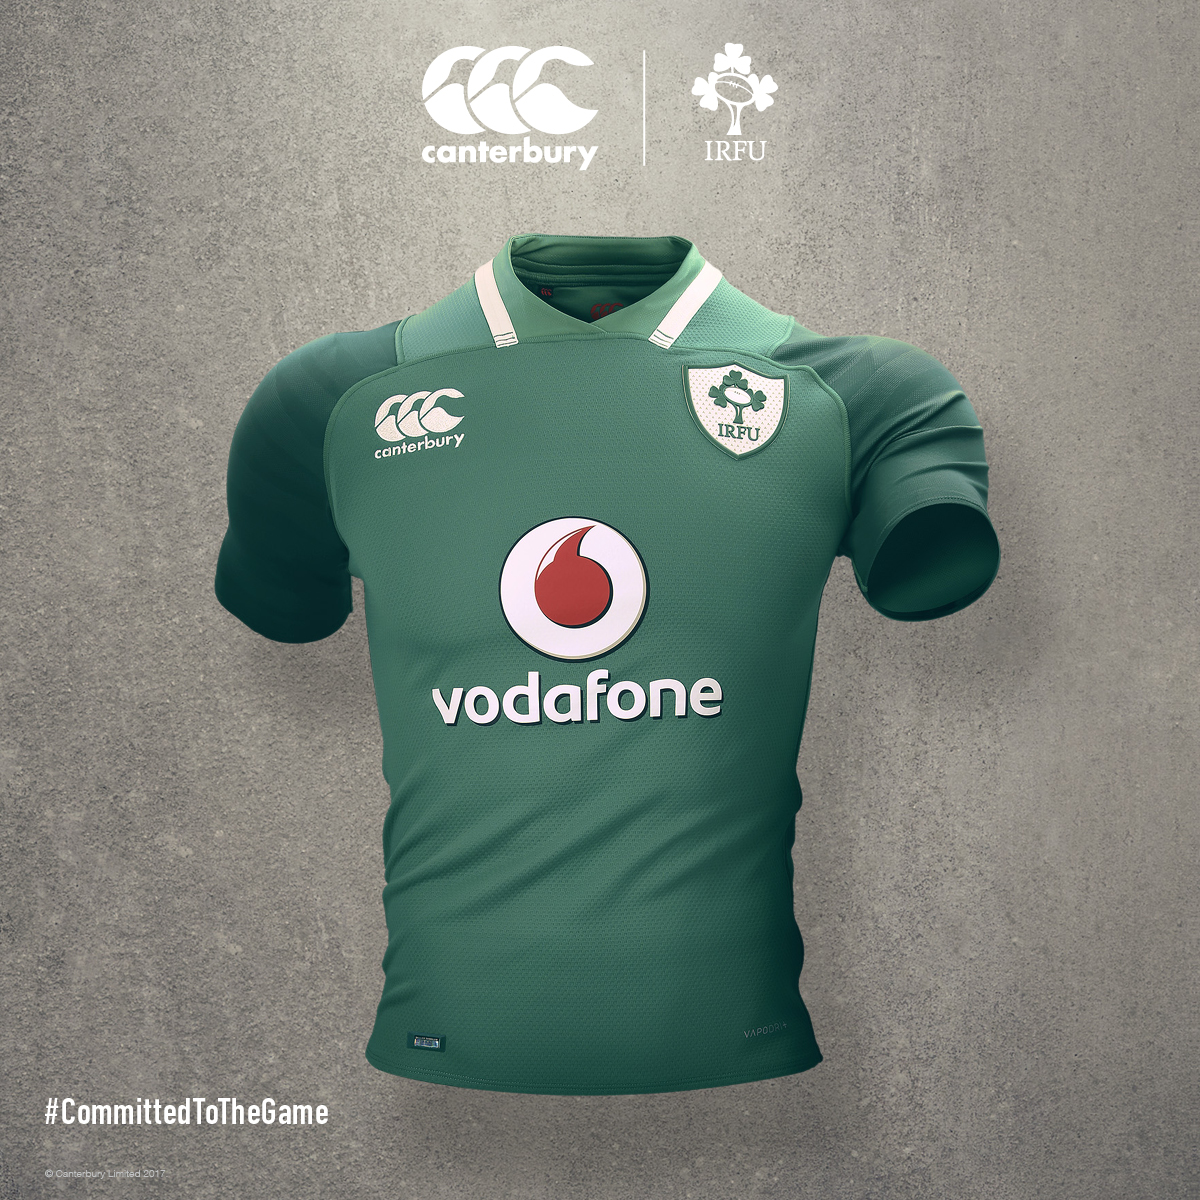 new irish rugby jersey